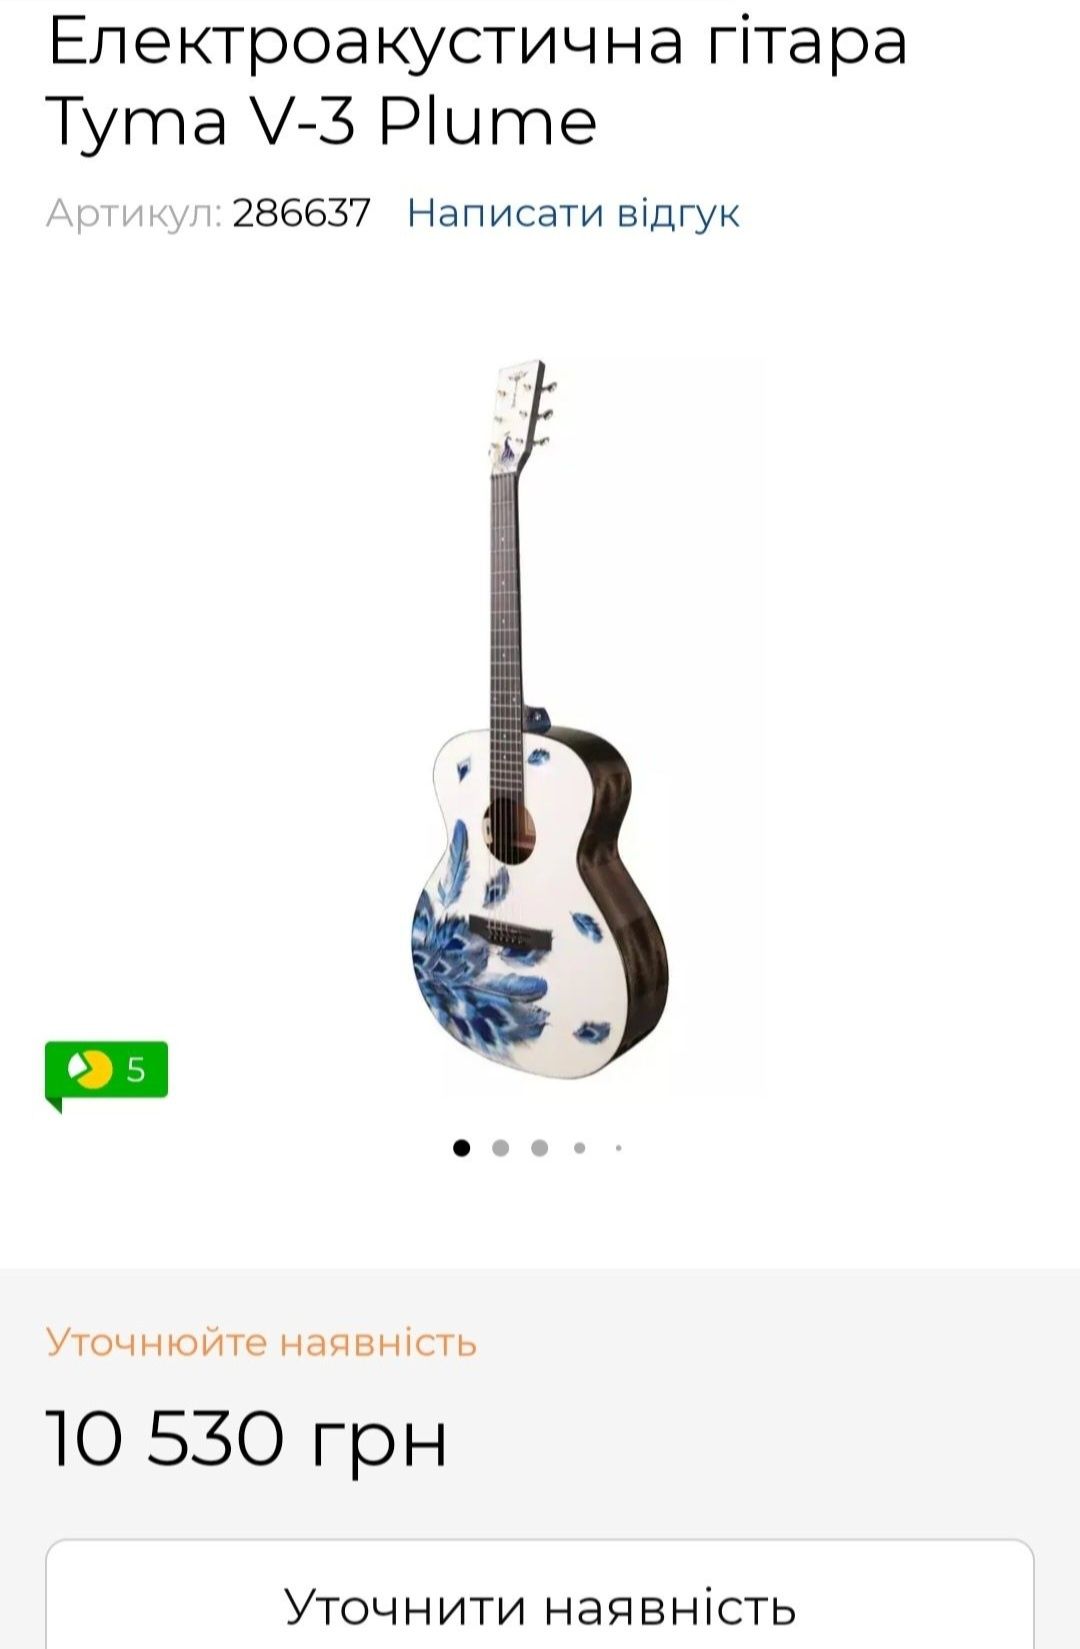 Електроакустична гітара Tyma v3 plume